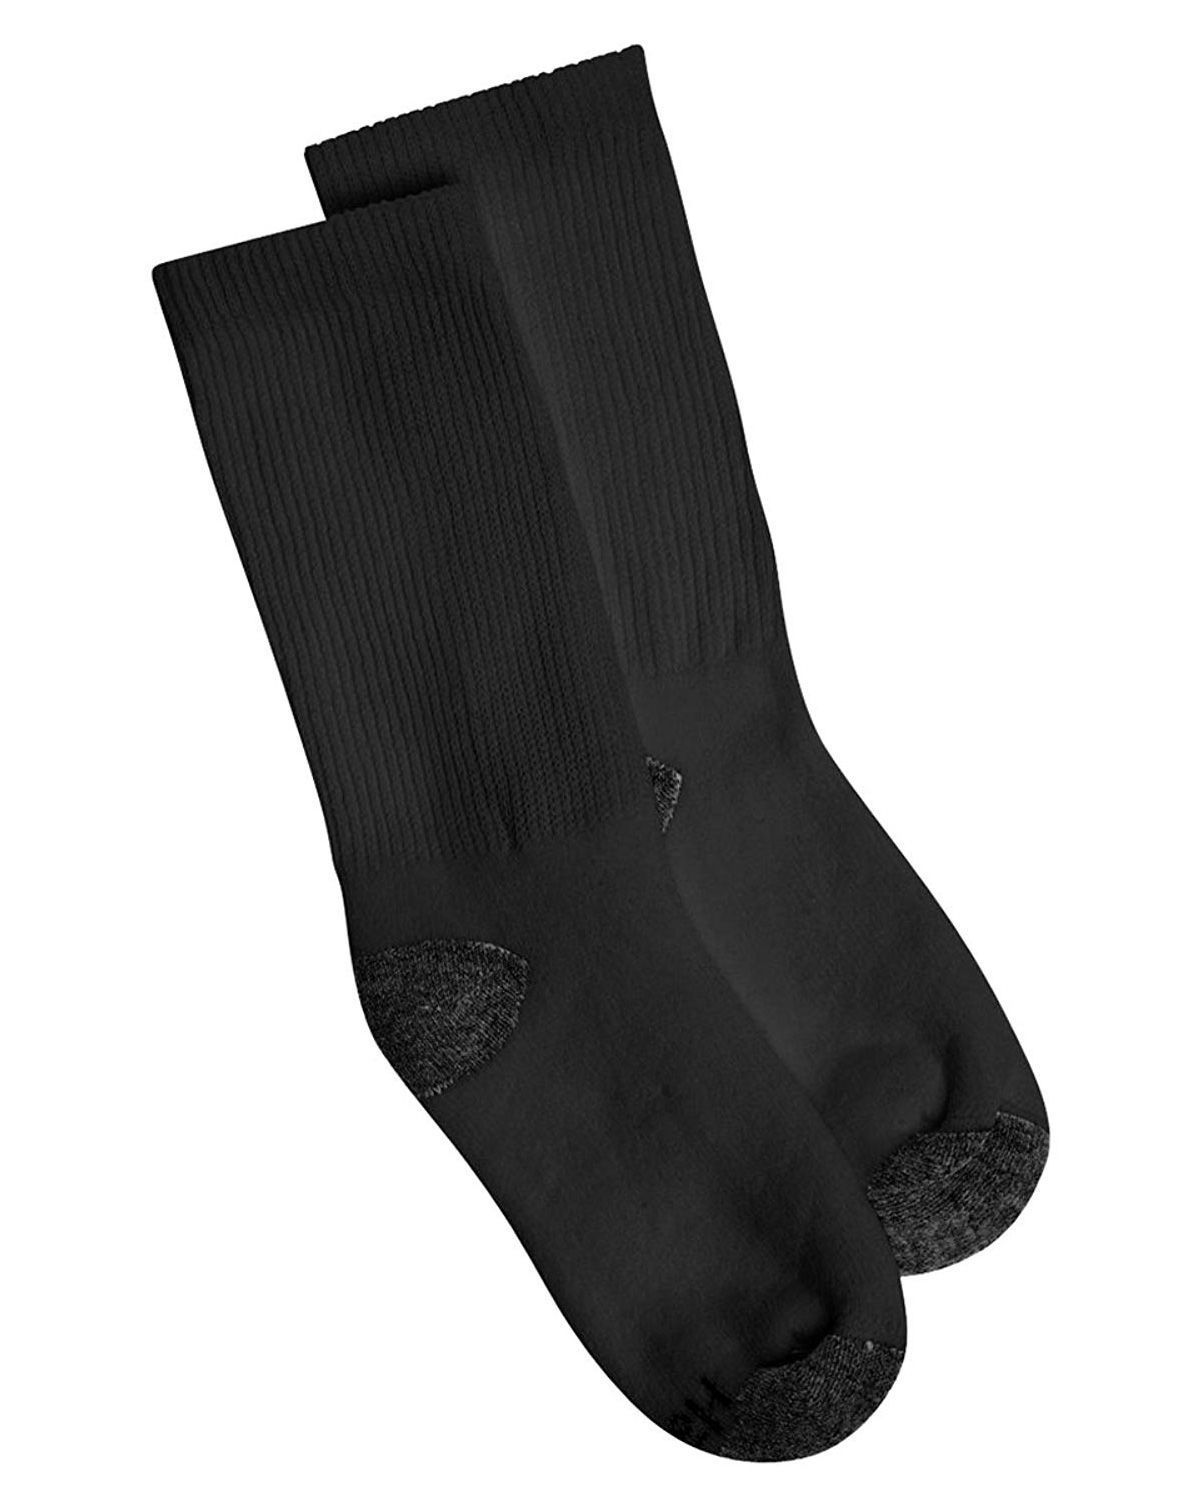 Hanes 431L6 Boys Crew Comfortblend Black EZ Sort Socks 6-Pack